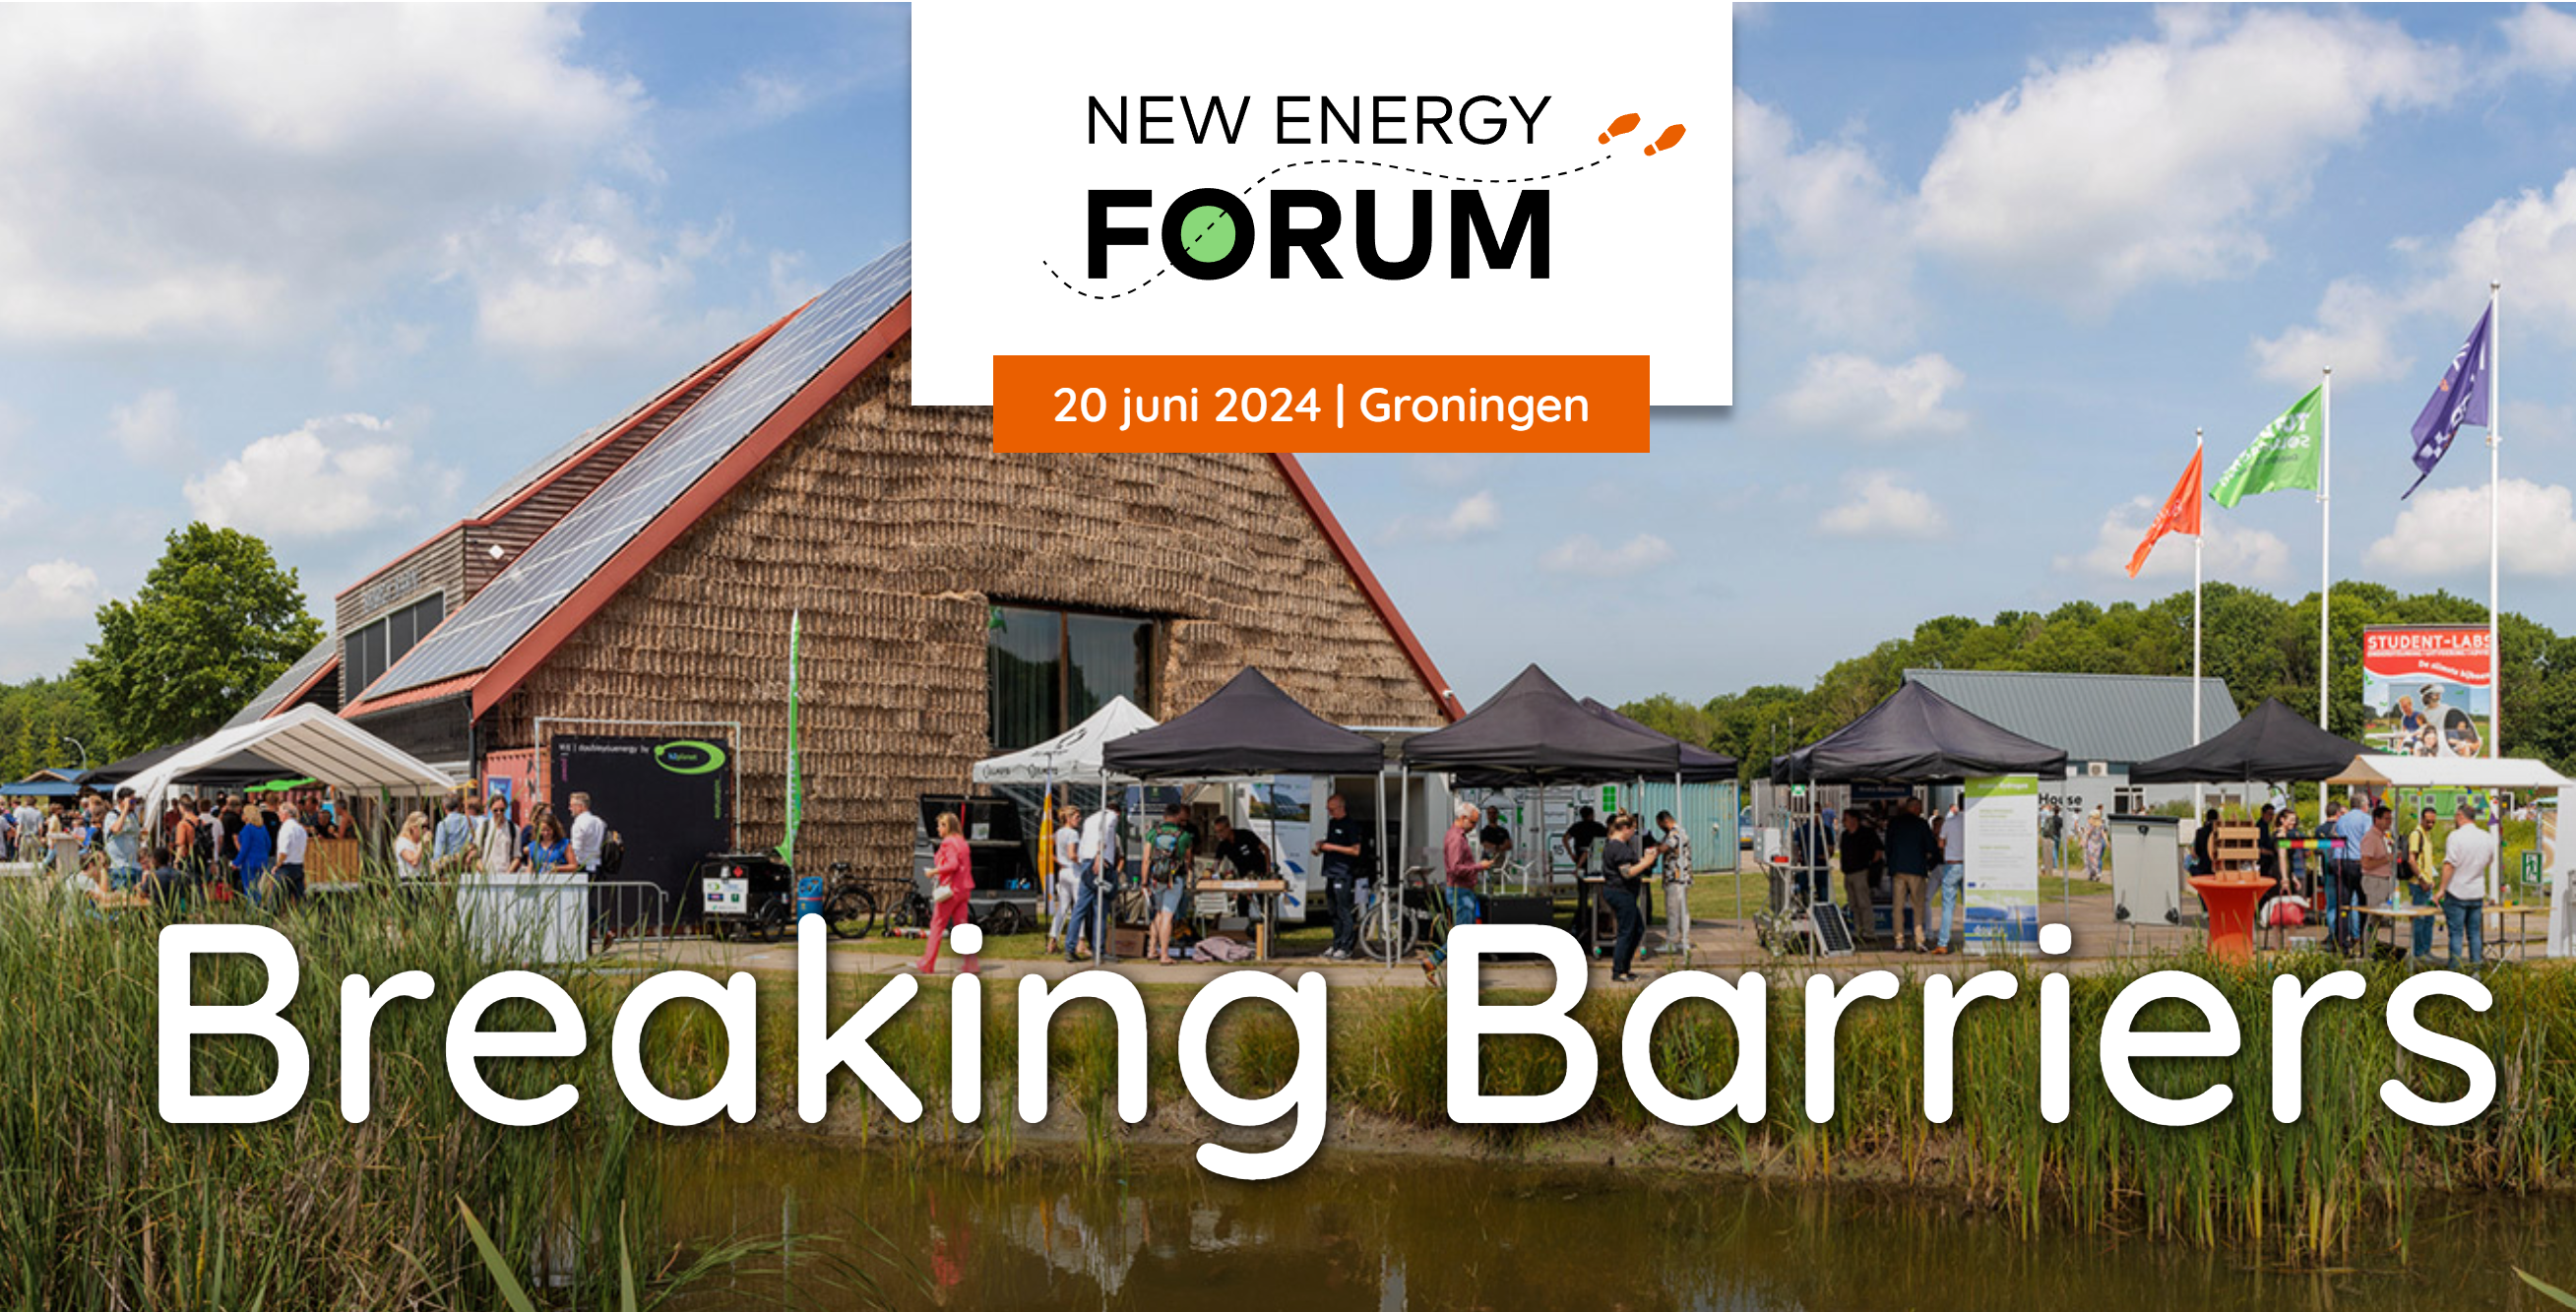 New Energy Forum: Breaking Barriers